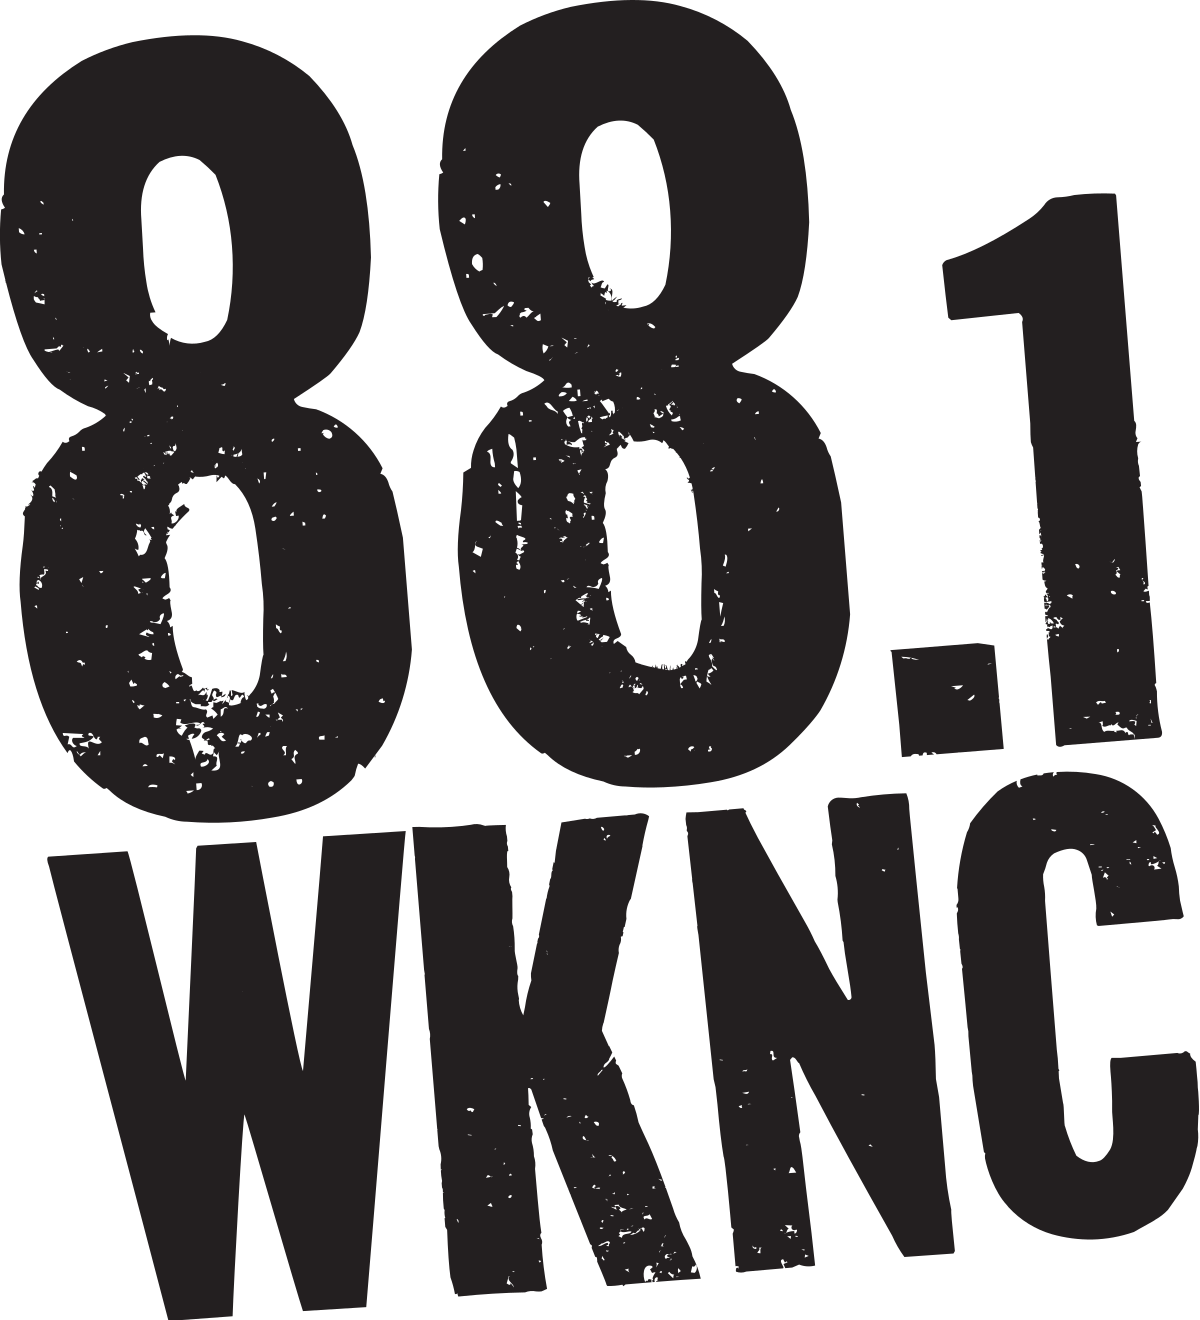 88.1 WKNC logo